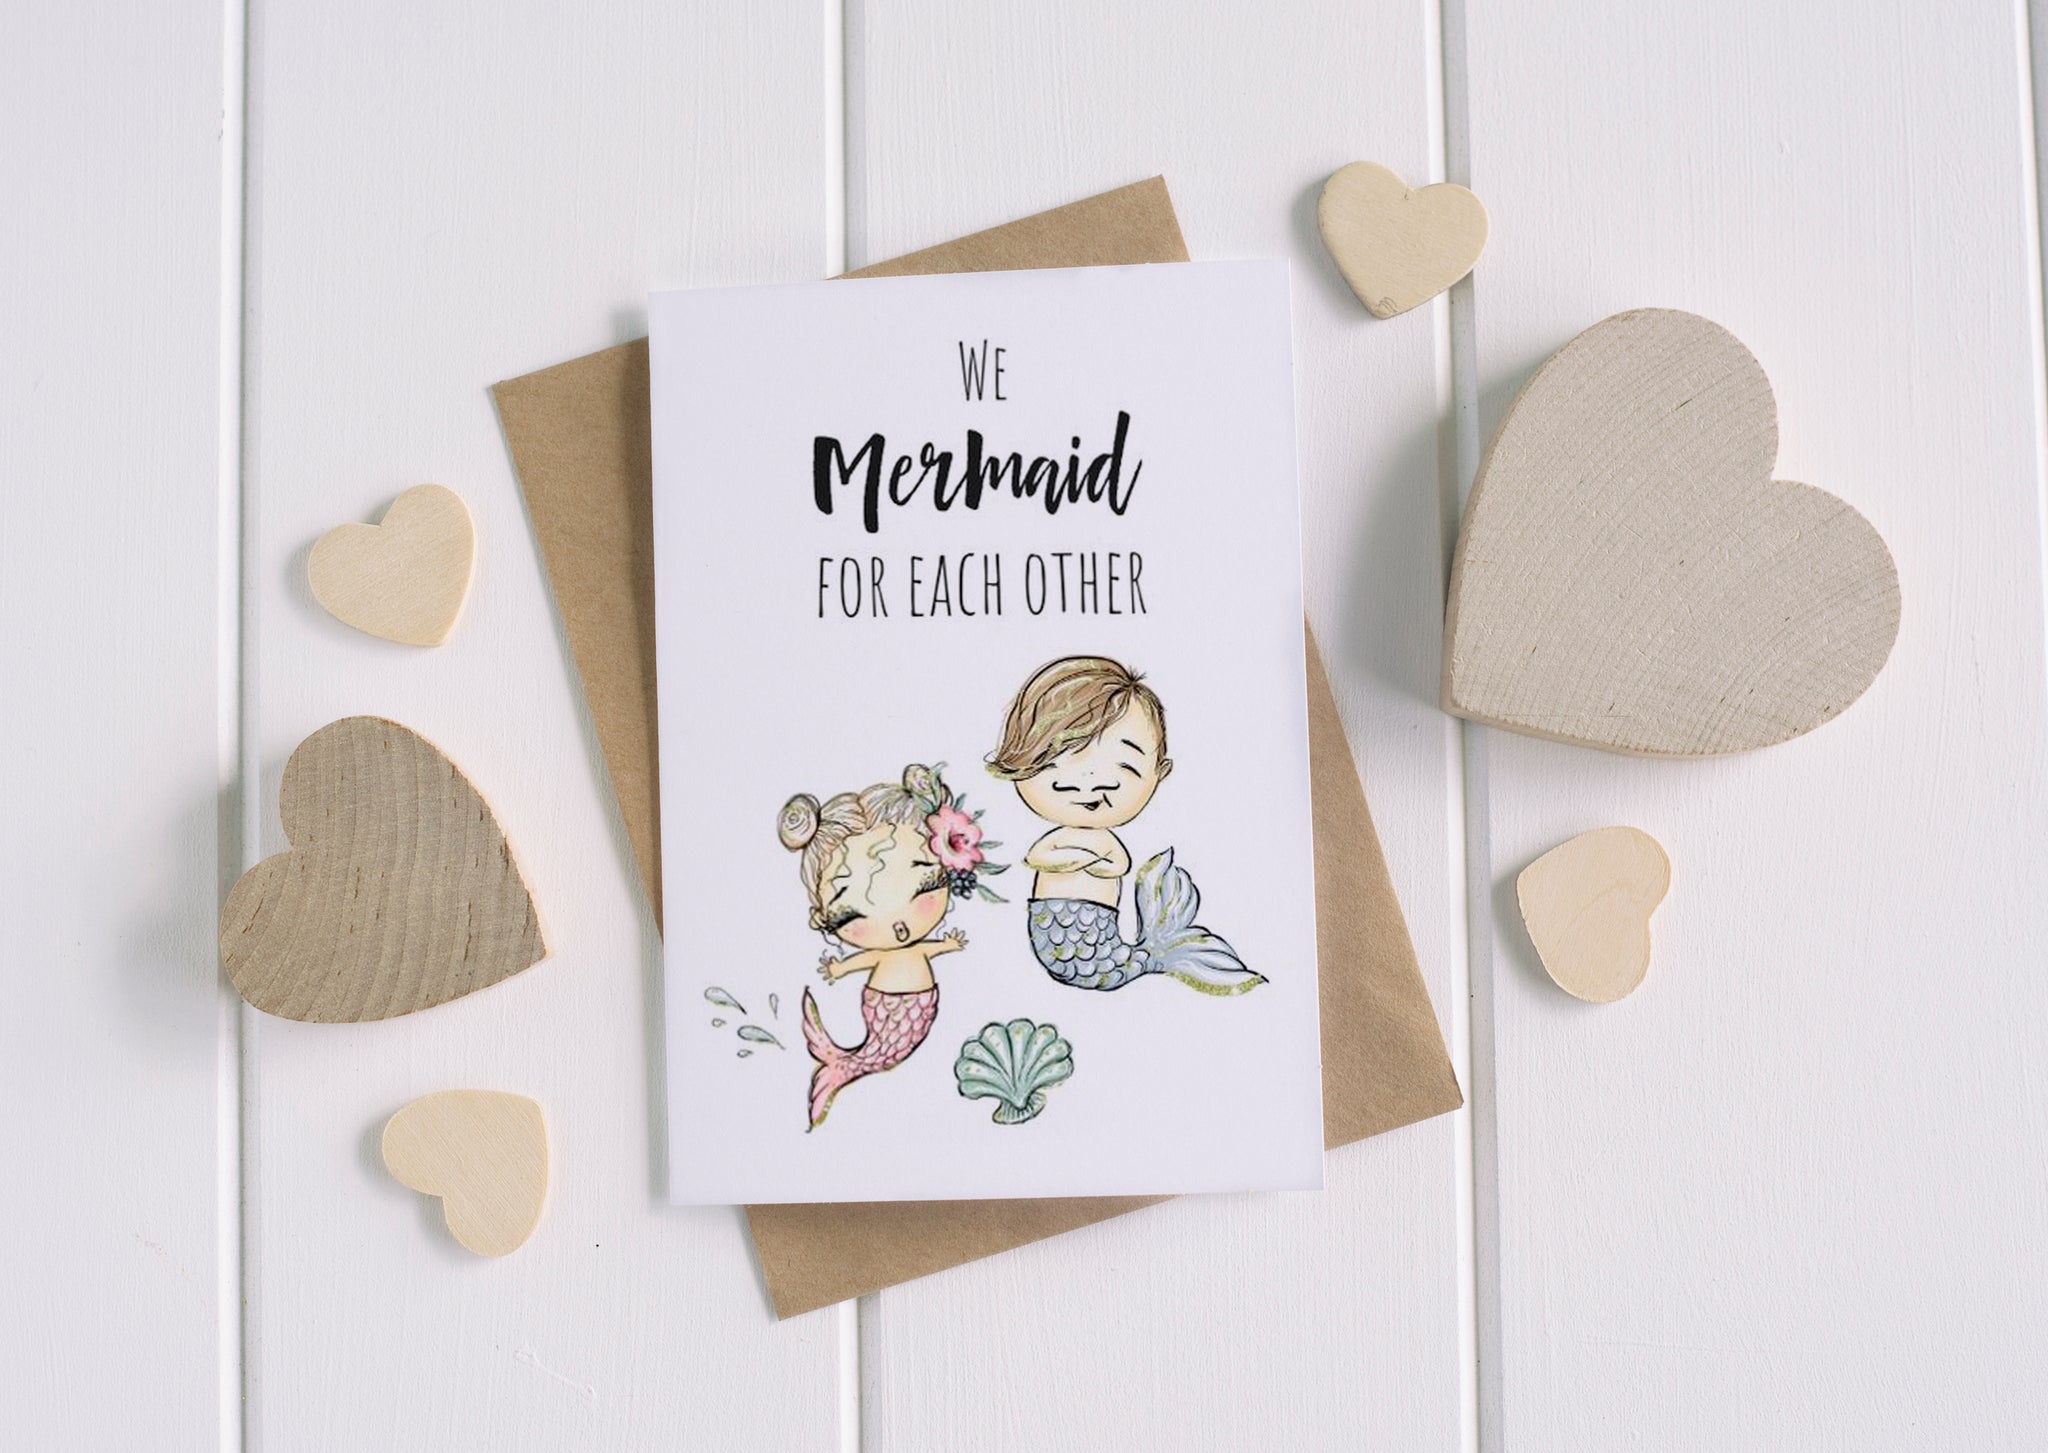 Cute & Funny Mermaid Greeting Card / Birthday Card / Animal Pun / C6 Blank Inside / We Mermaid for Each Other